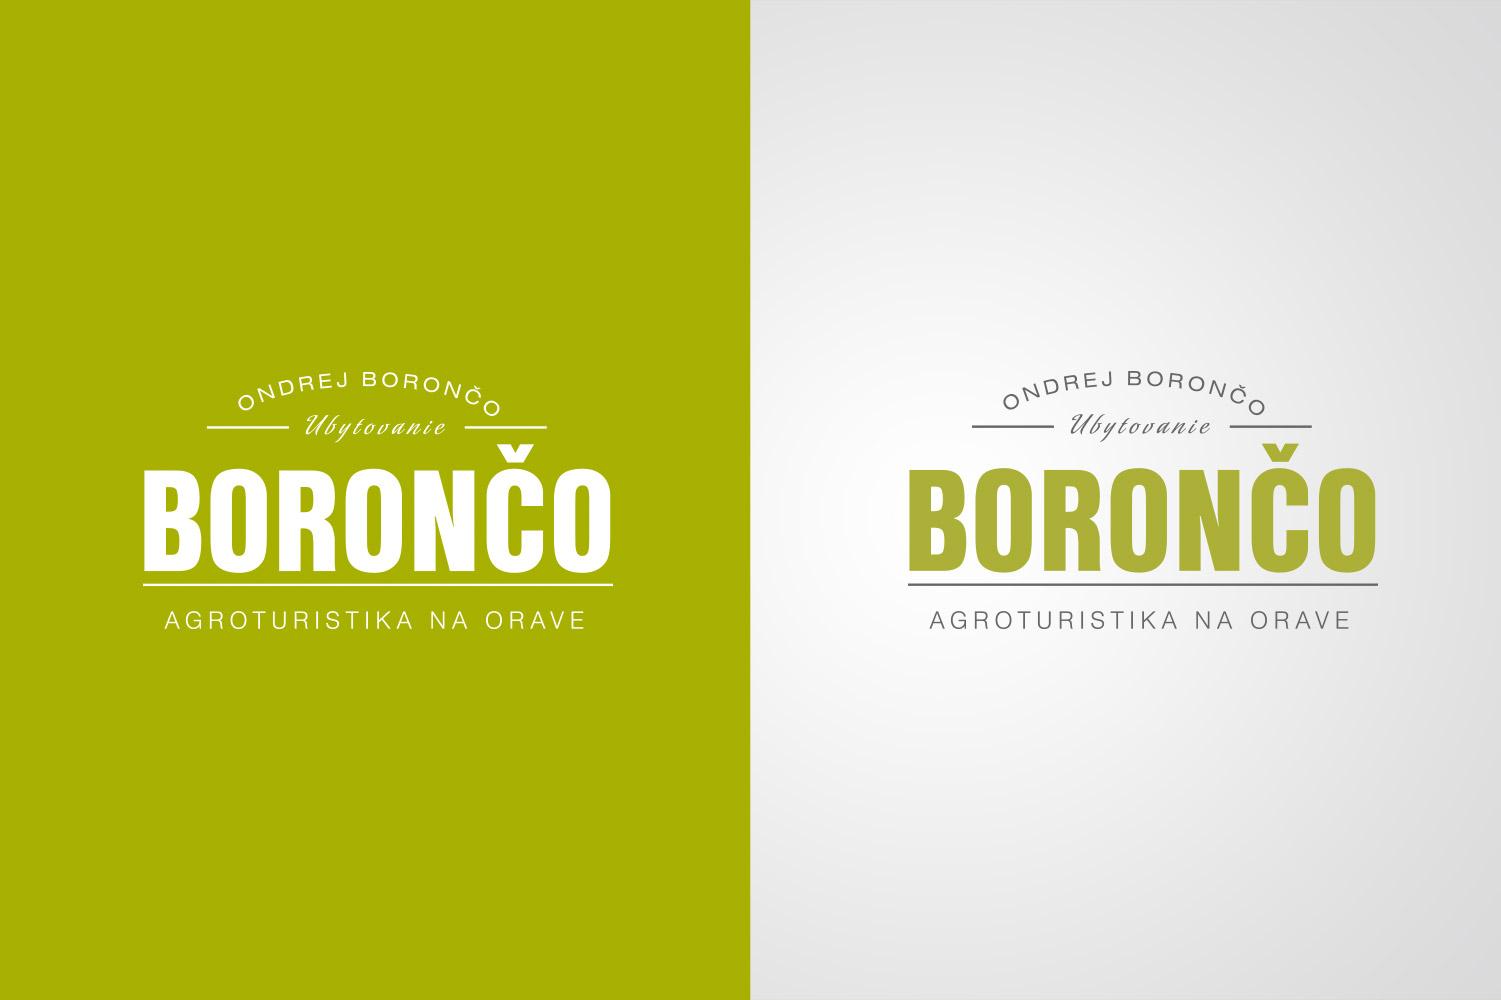 Boronco, logo & web design image